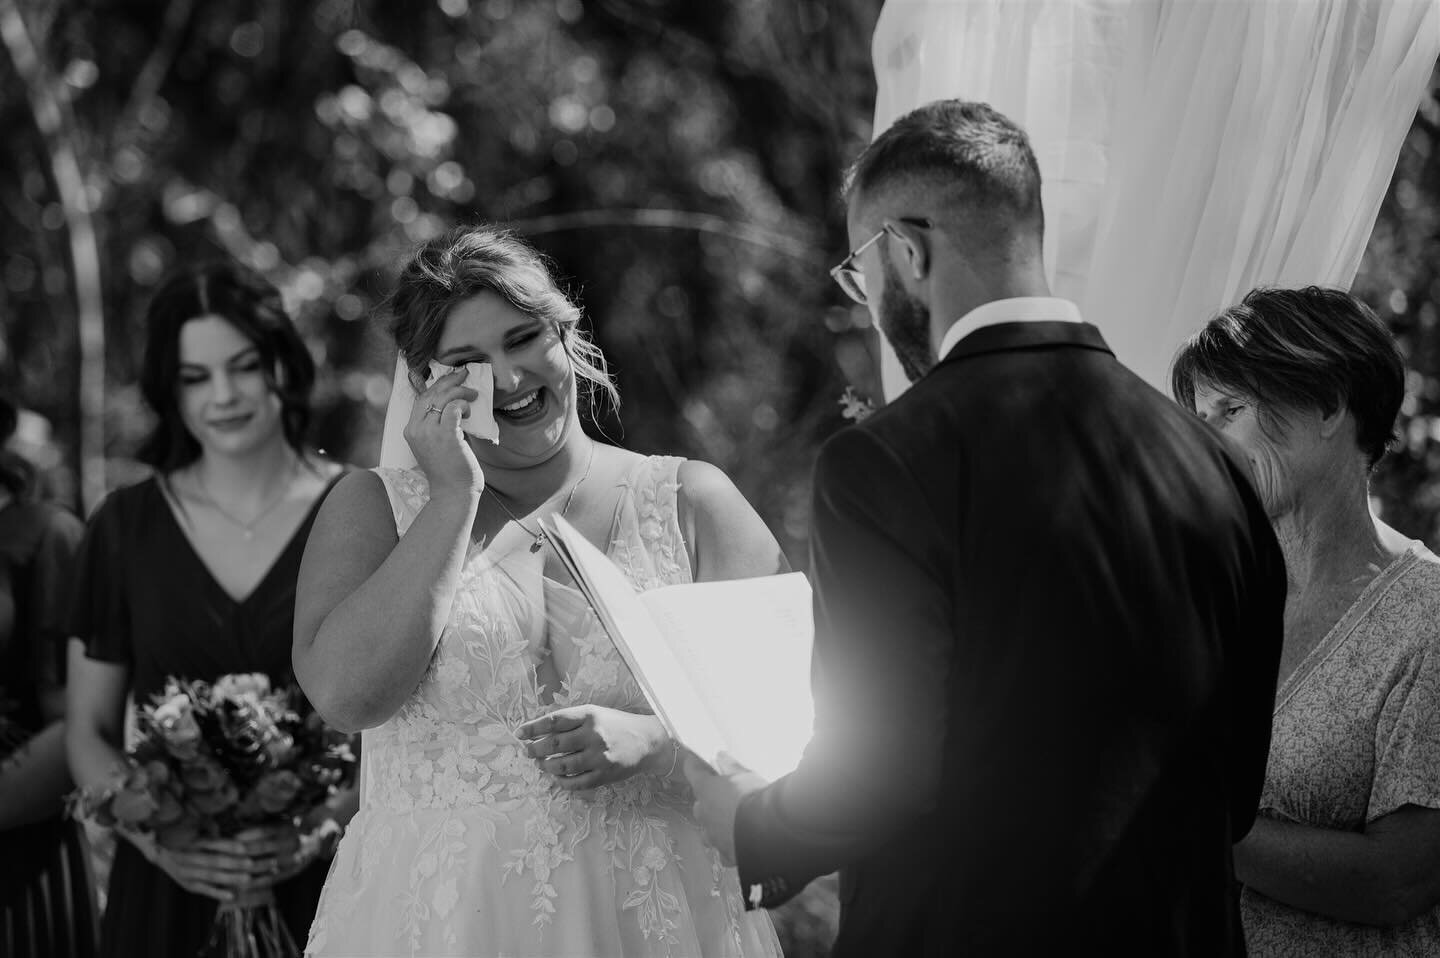 I love to capture the tears during vows. 
.
.
.
.
.
.
.
.
.
.
.
.
.
#launcestonphotographer #tasmaniaweddingphotographer #launcestonweddingphotographer #burnieweddingphotographer #devonportweddingphotographer #tailraceweddings